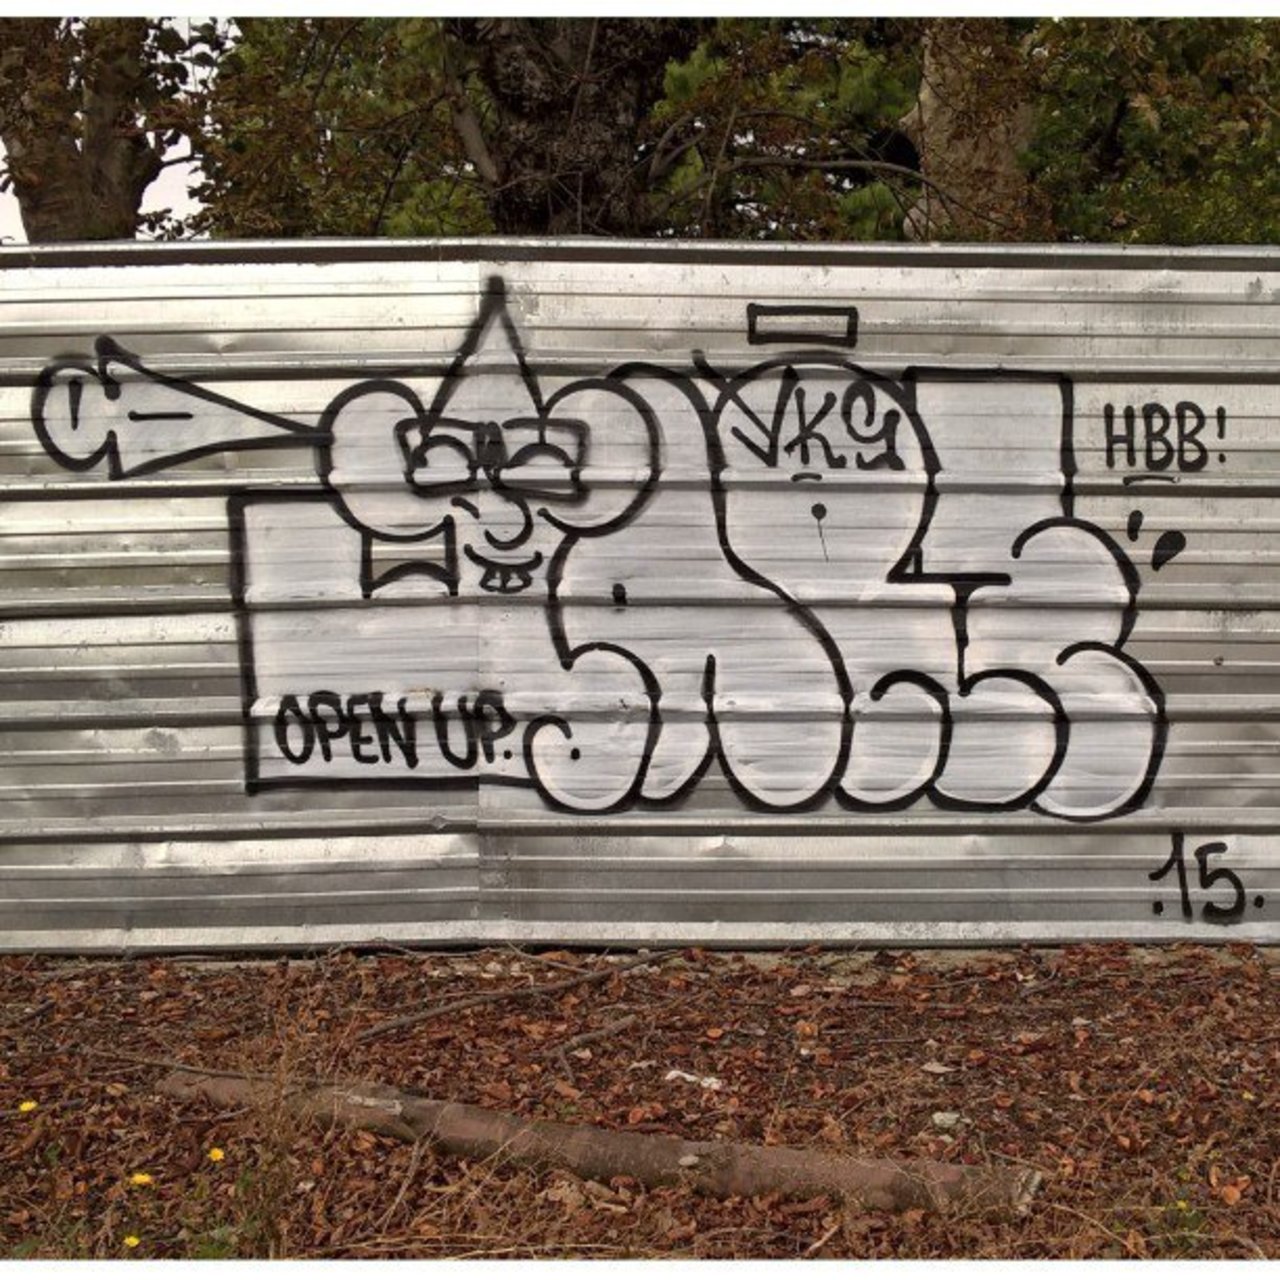 JARE
#YKS #streetart #graffiti #graff #art #fatcap #bombing #sprayart #spraycanart #wallart #handstyle #lettering #… https://t.co/iu56YIXbYK